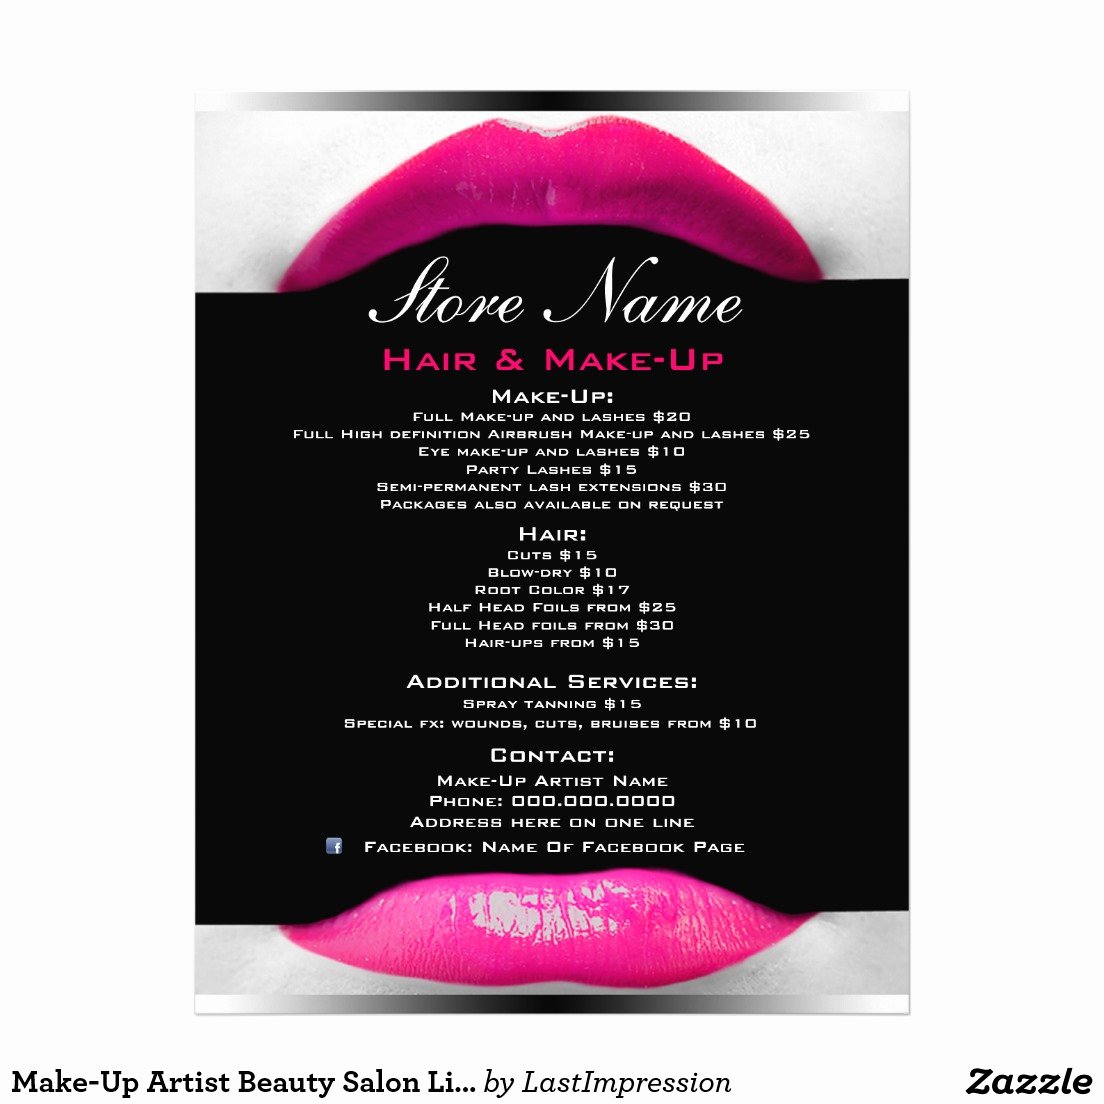 Beauty Salon Flyers Programs Zazzle Bar Price Lis with